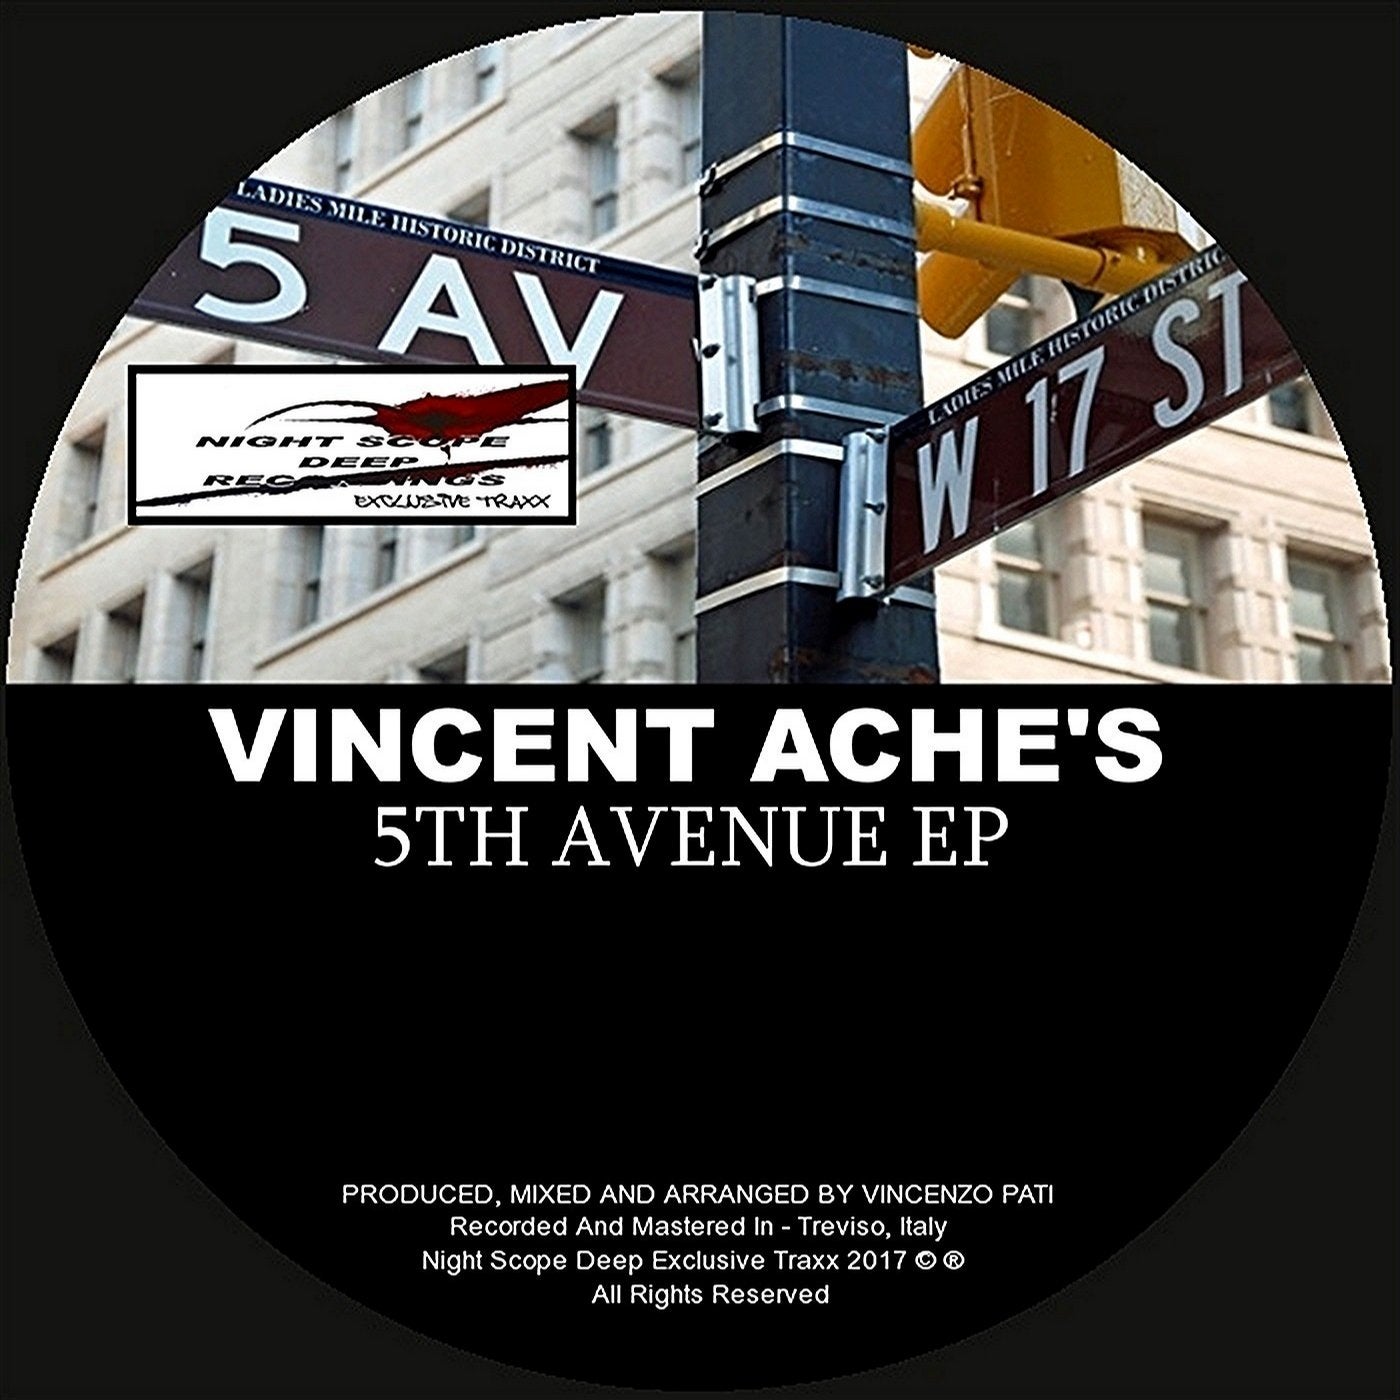 5th Avenue EP